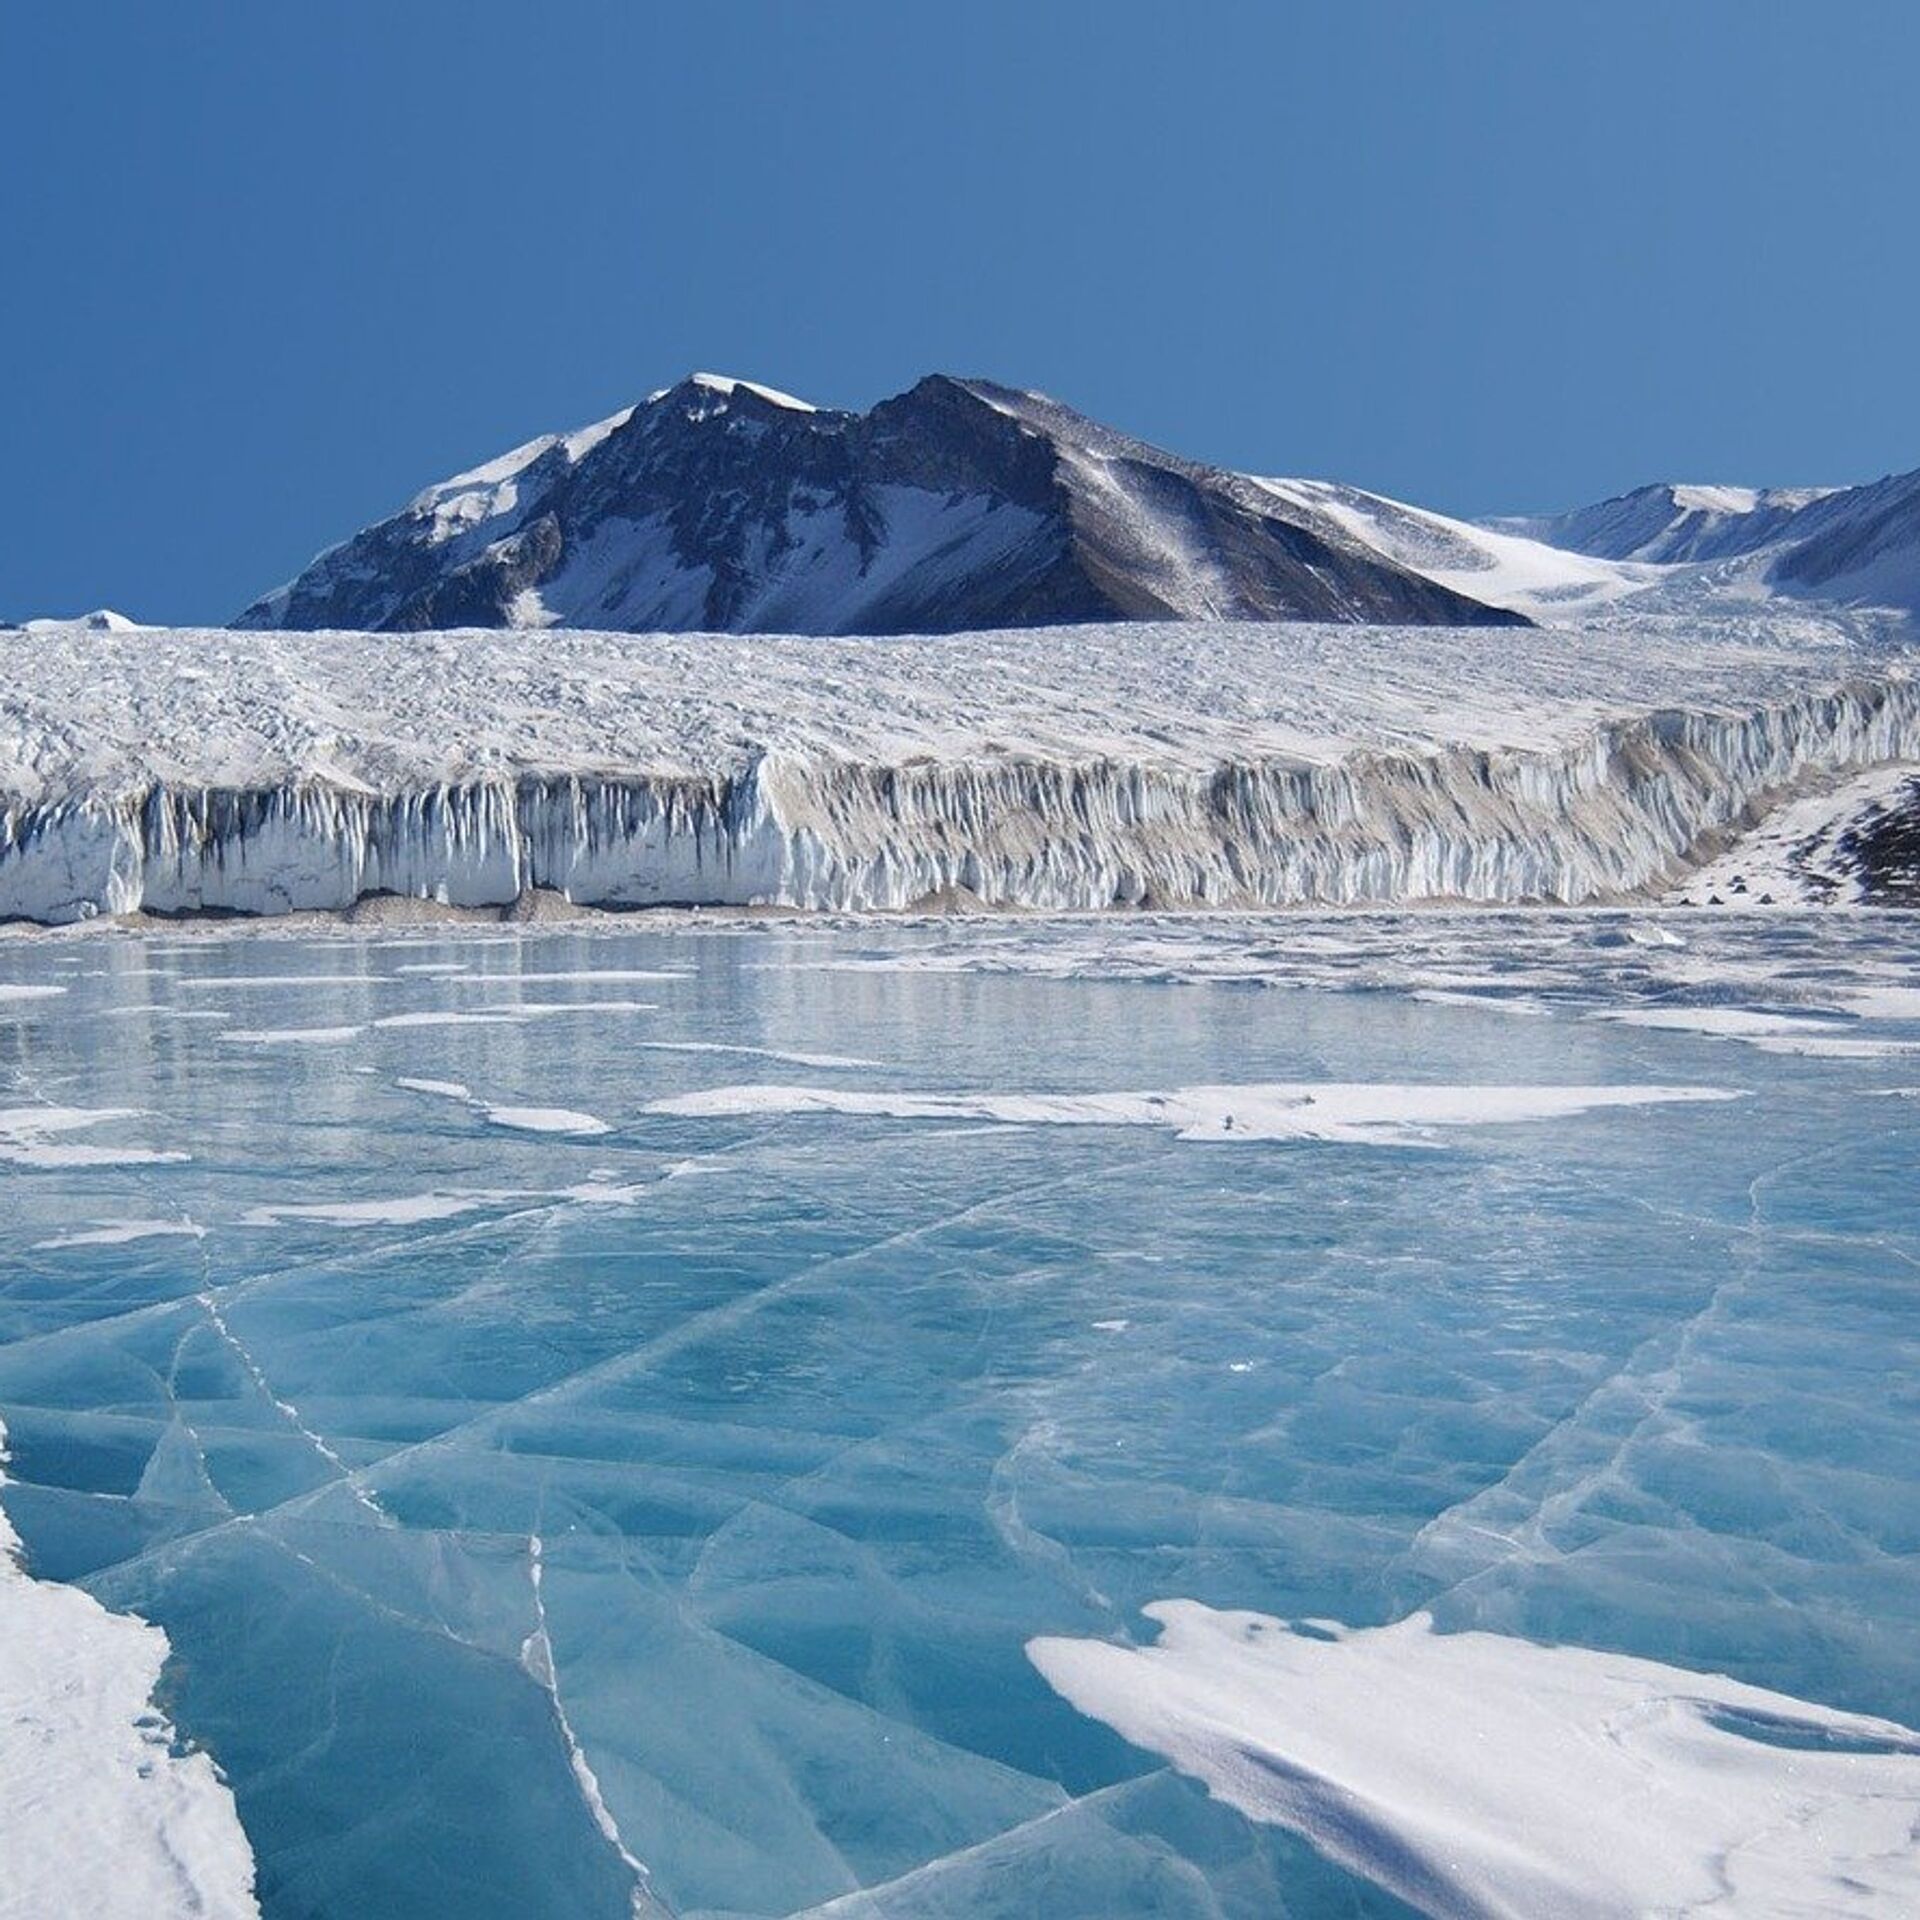 Реки и озера озеро восток. Озеро Восток в Антарктиде. Ледник. Лед на реке. Озеро покрытое льдом.